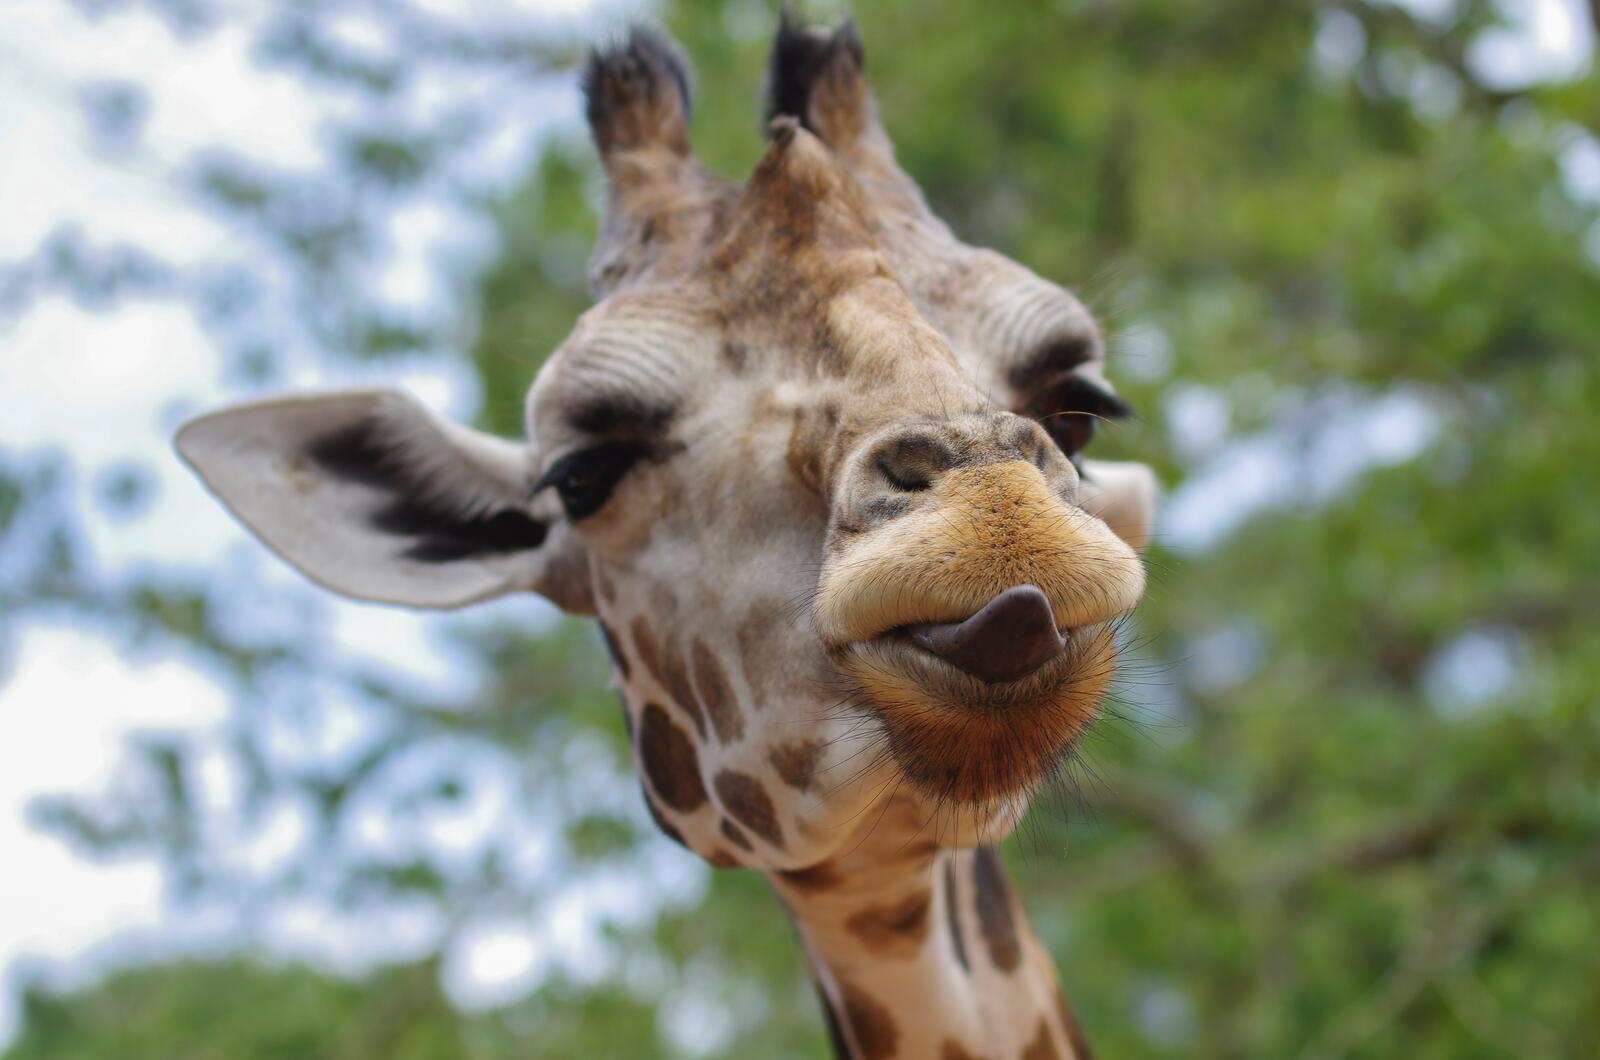 Free photo The giraffe shows his tongue